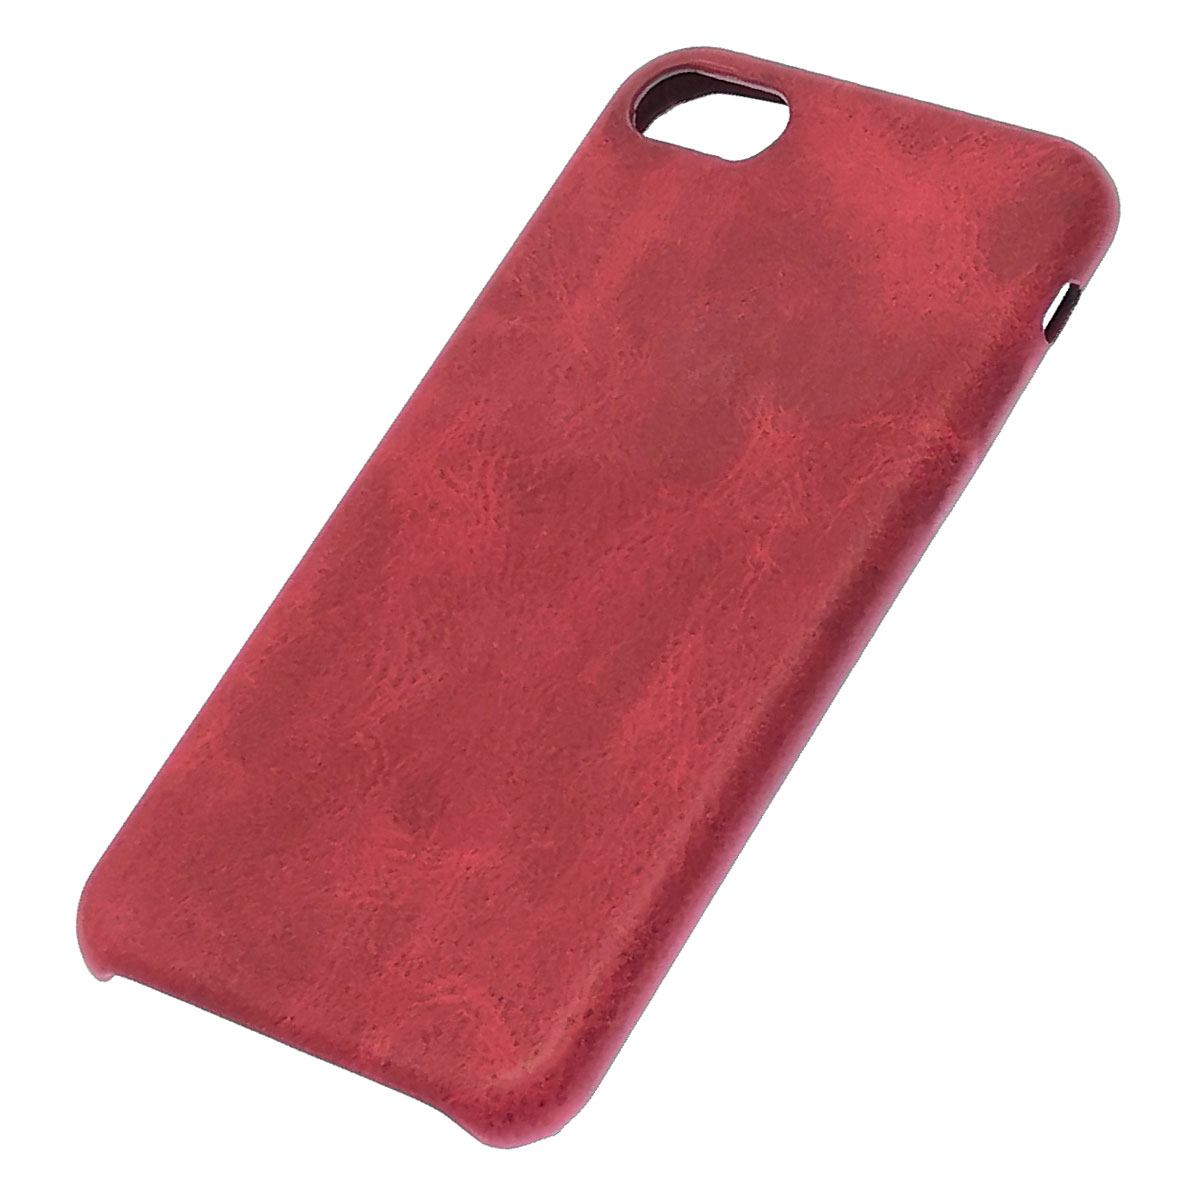 Чехол накладка для APPLE iPhone 7, пластик, экокожа, цвет красный.